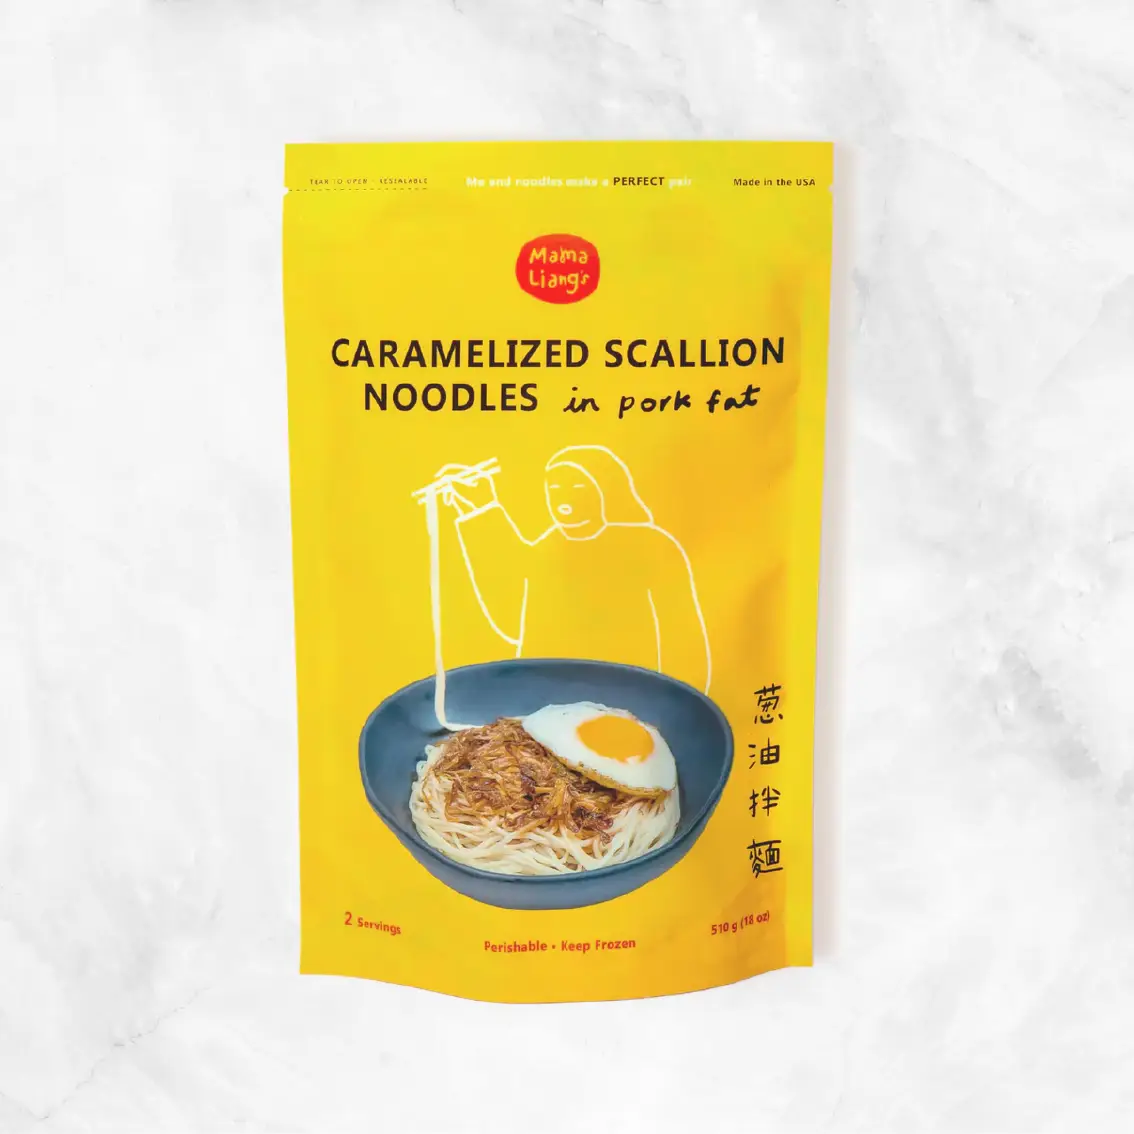 Caramelized Scallion Noodles Delivery